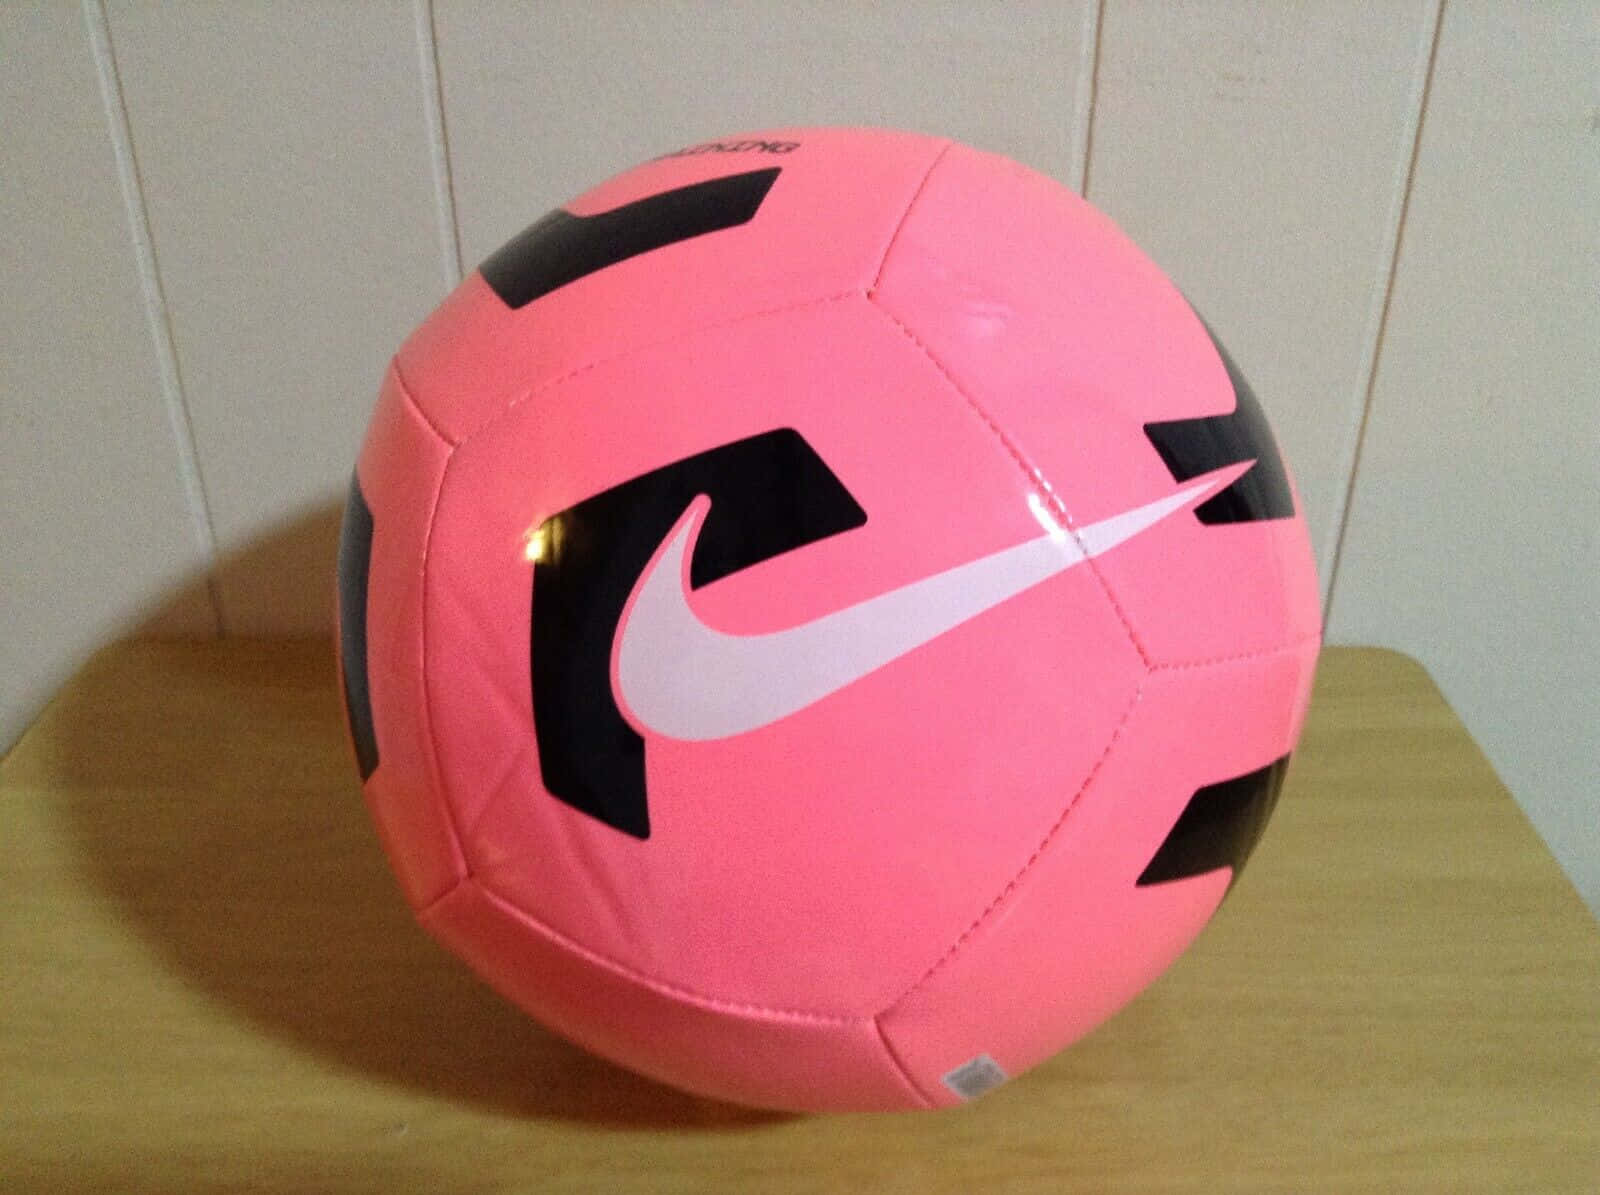 Bright Pink Soccer Ball on Vibrant Green Grass Wallpaper